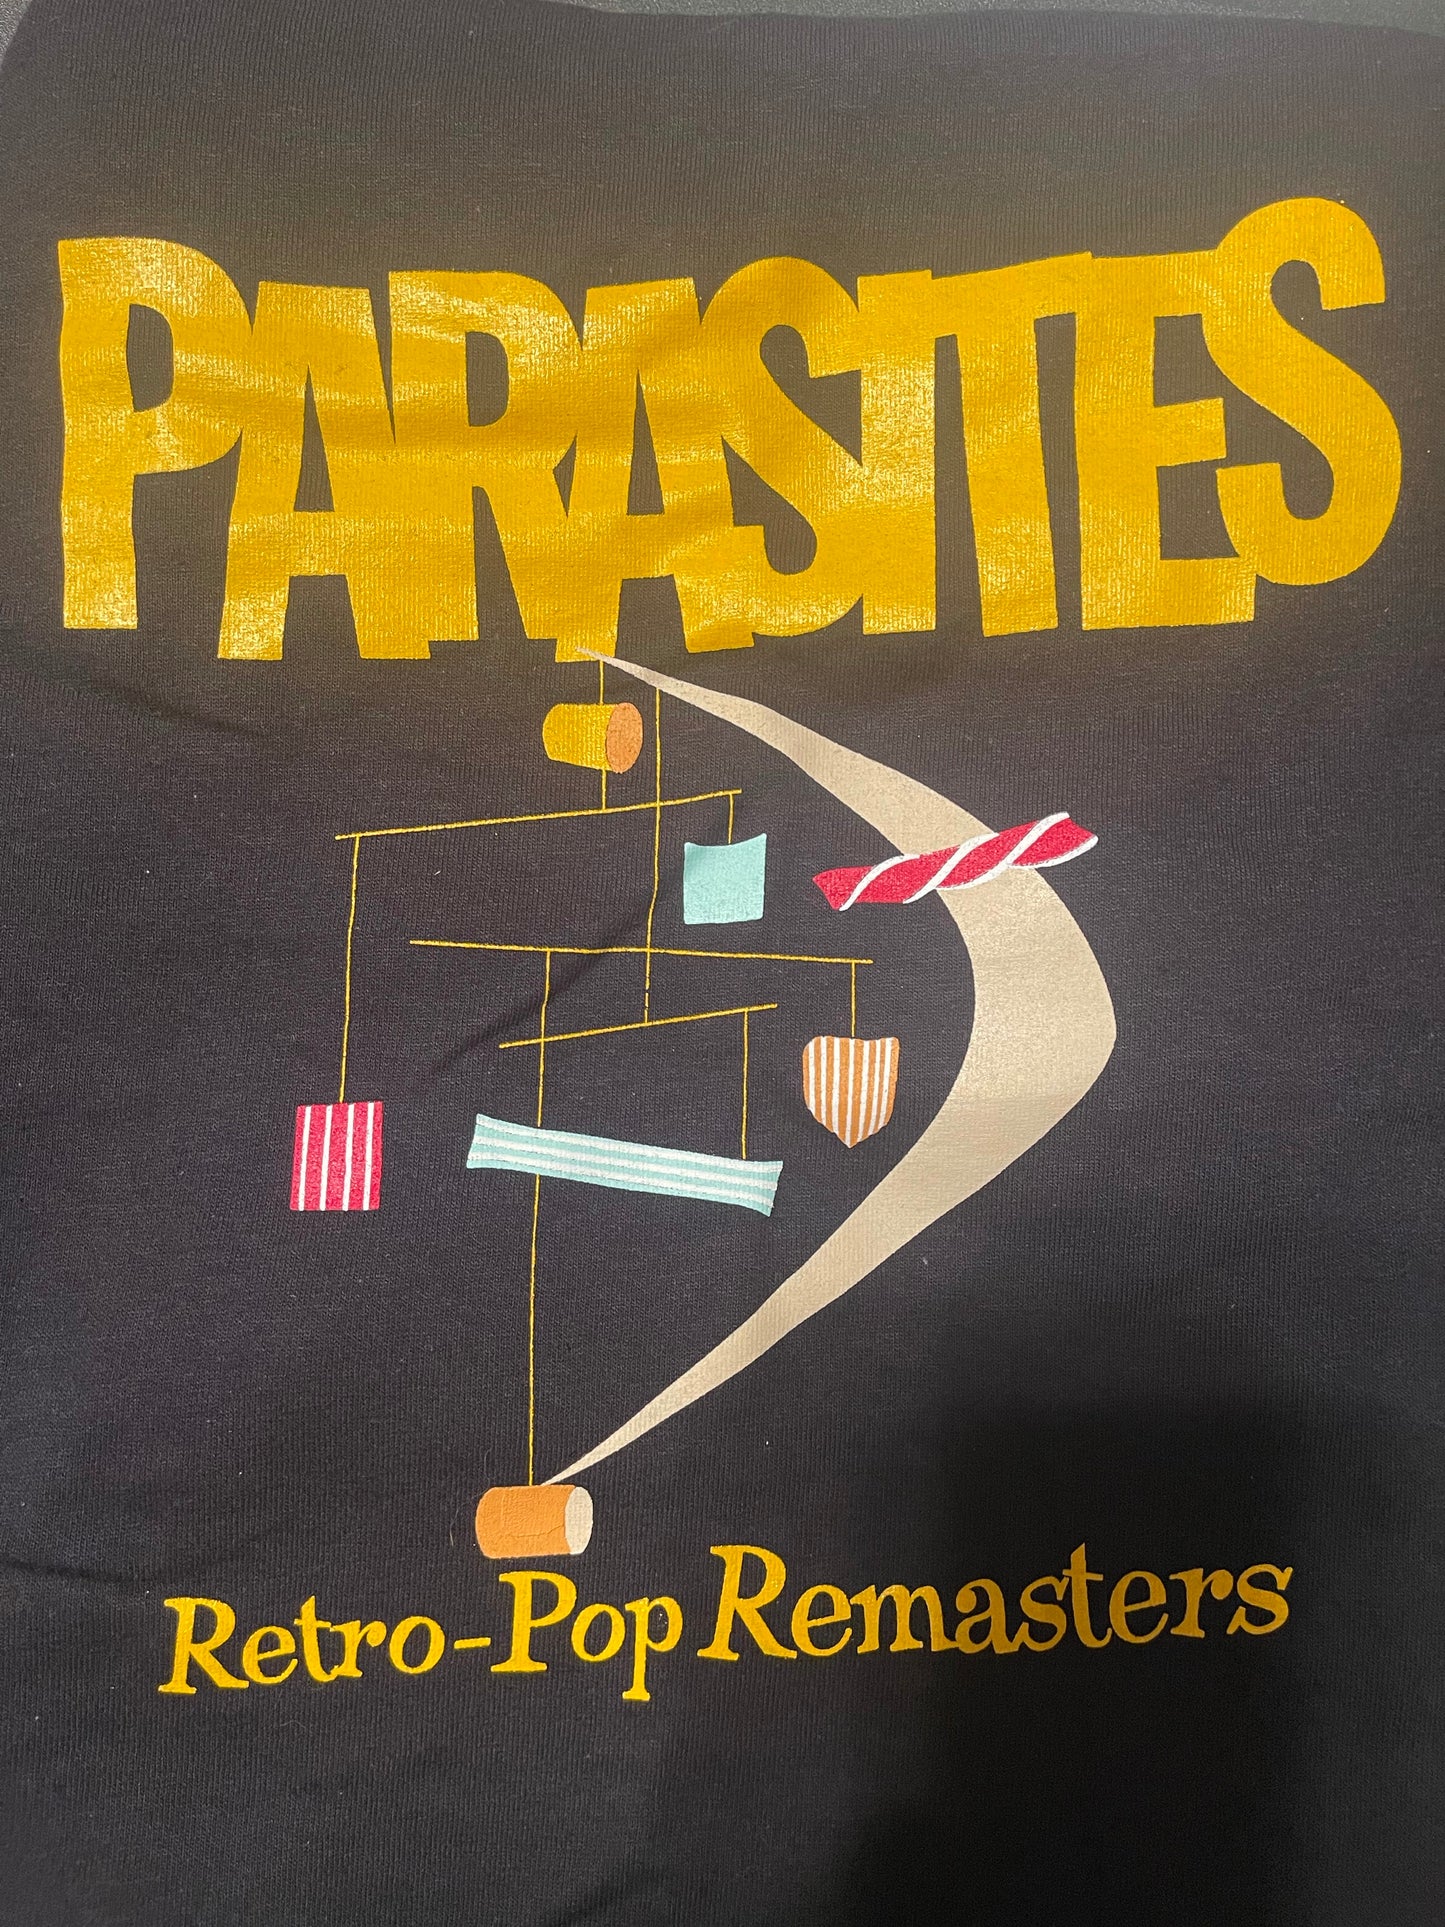 OMRMCH 005 PARASITES “Retro-Pop Remasters” T-Shirt